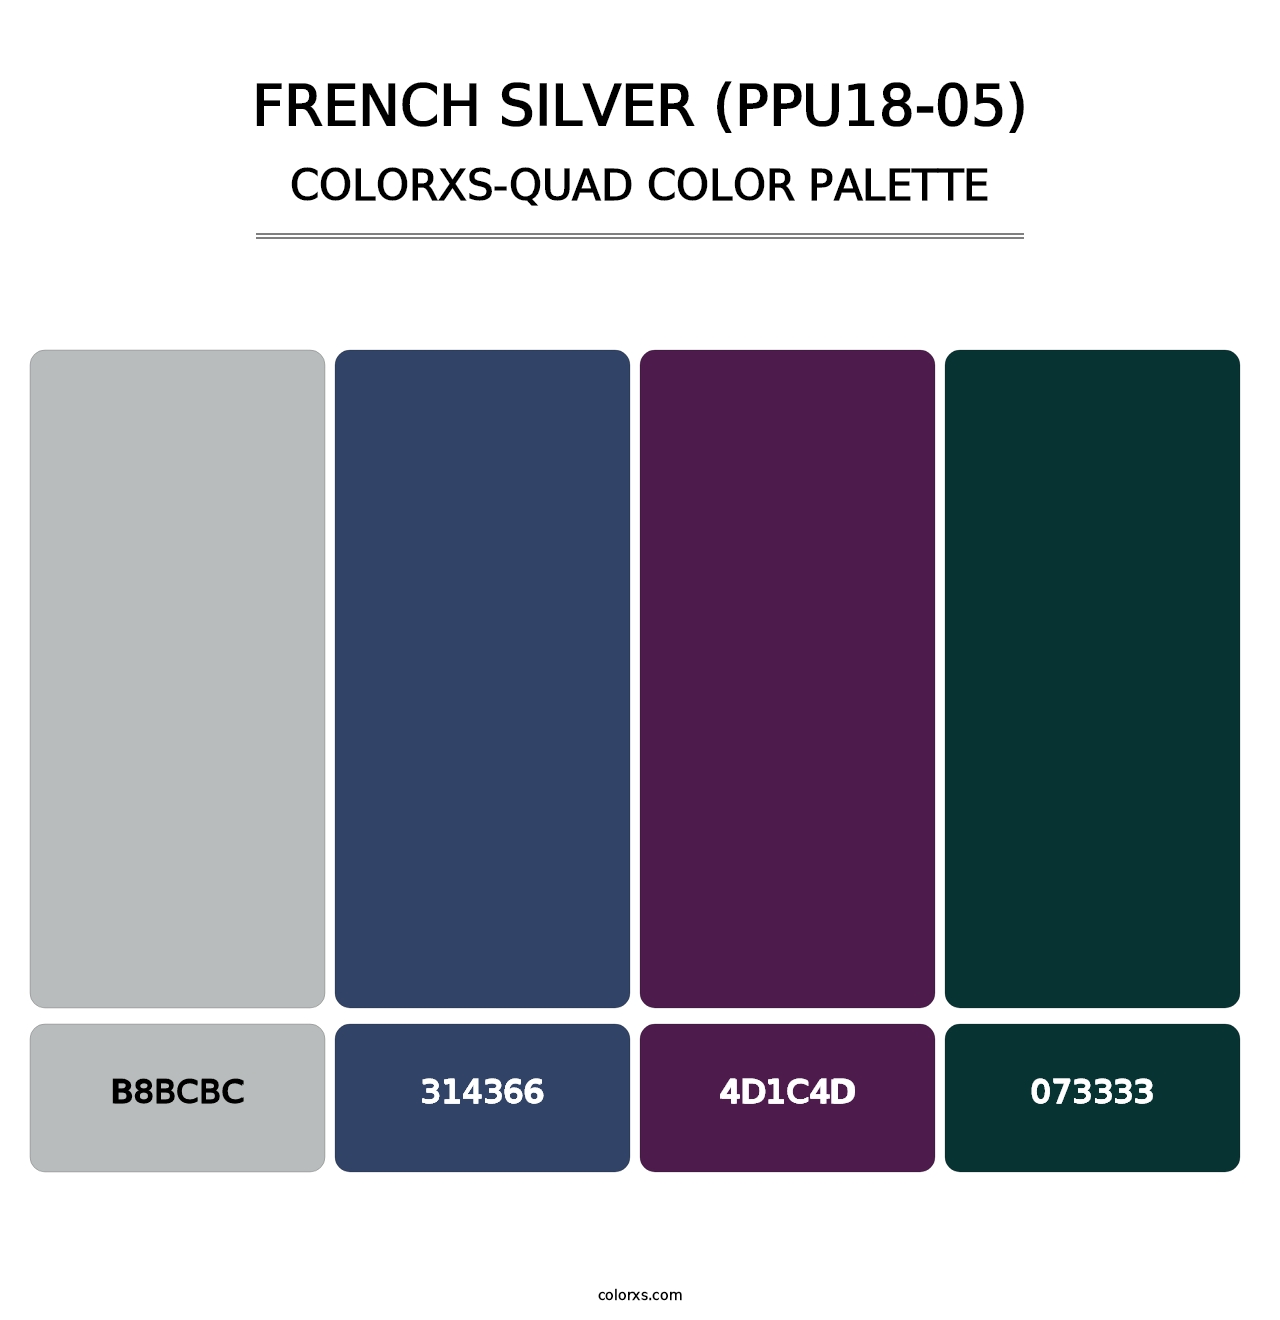 French Silver (PPU18-05) - Colorxs Quad Palette